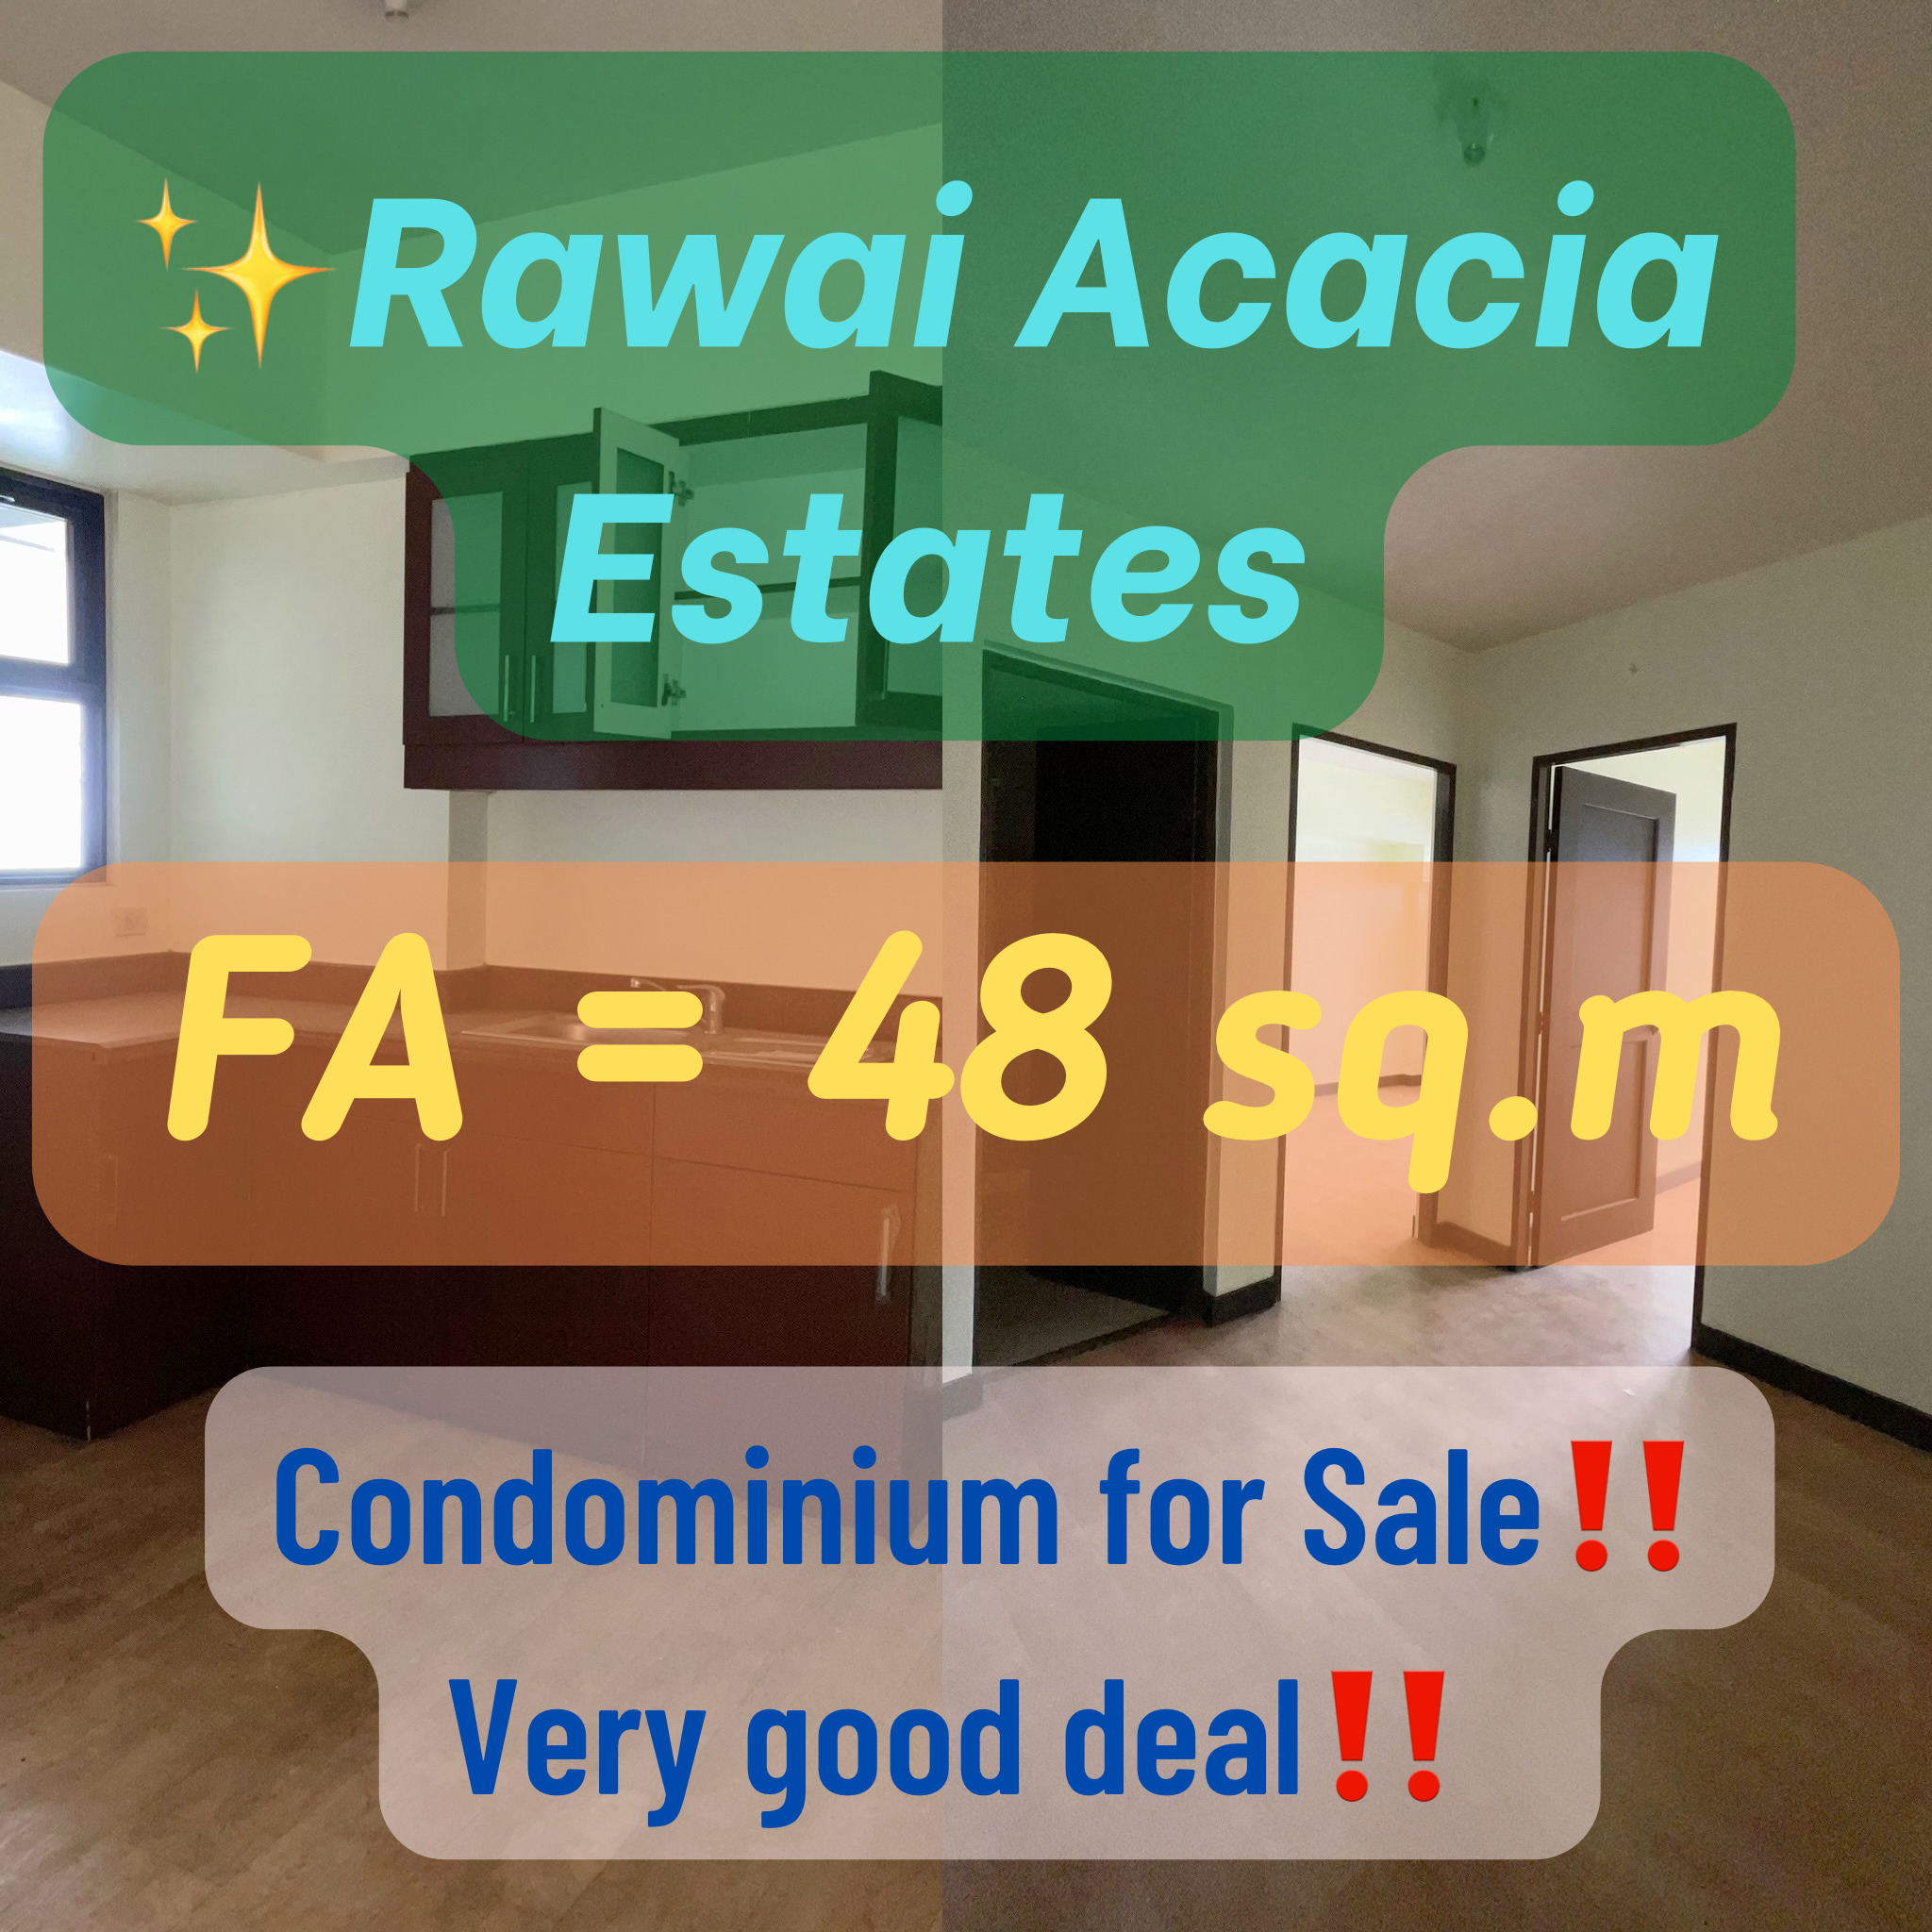 🔑Rawai Acacia Estates  FOR SALE‼️ VERY GOOD DEAL‼️